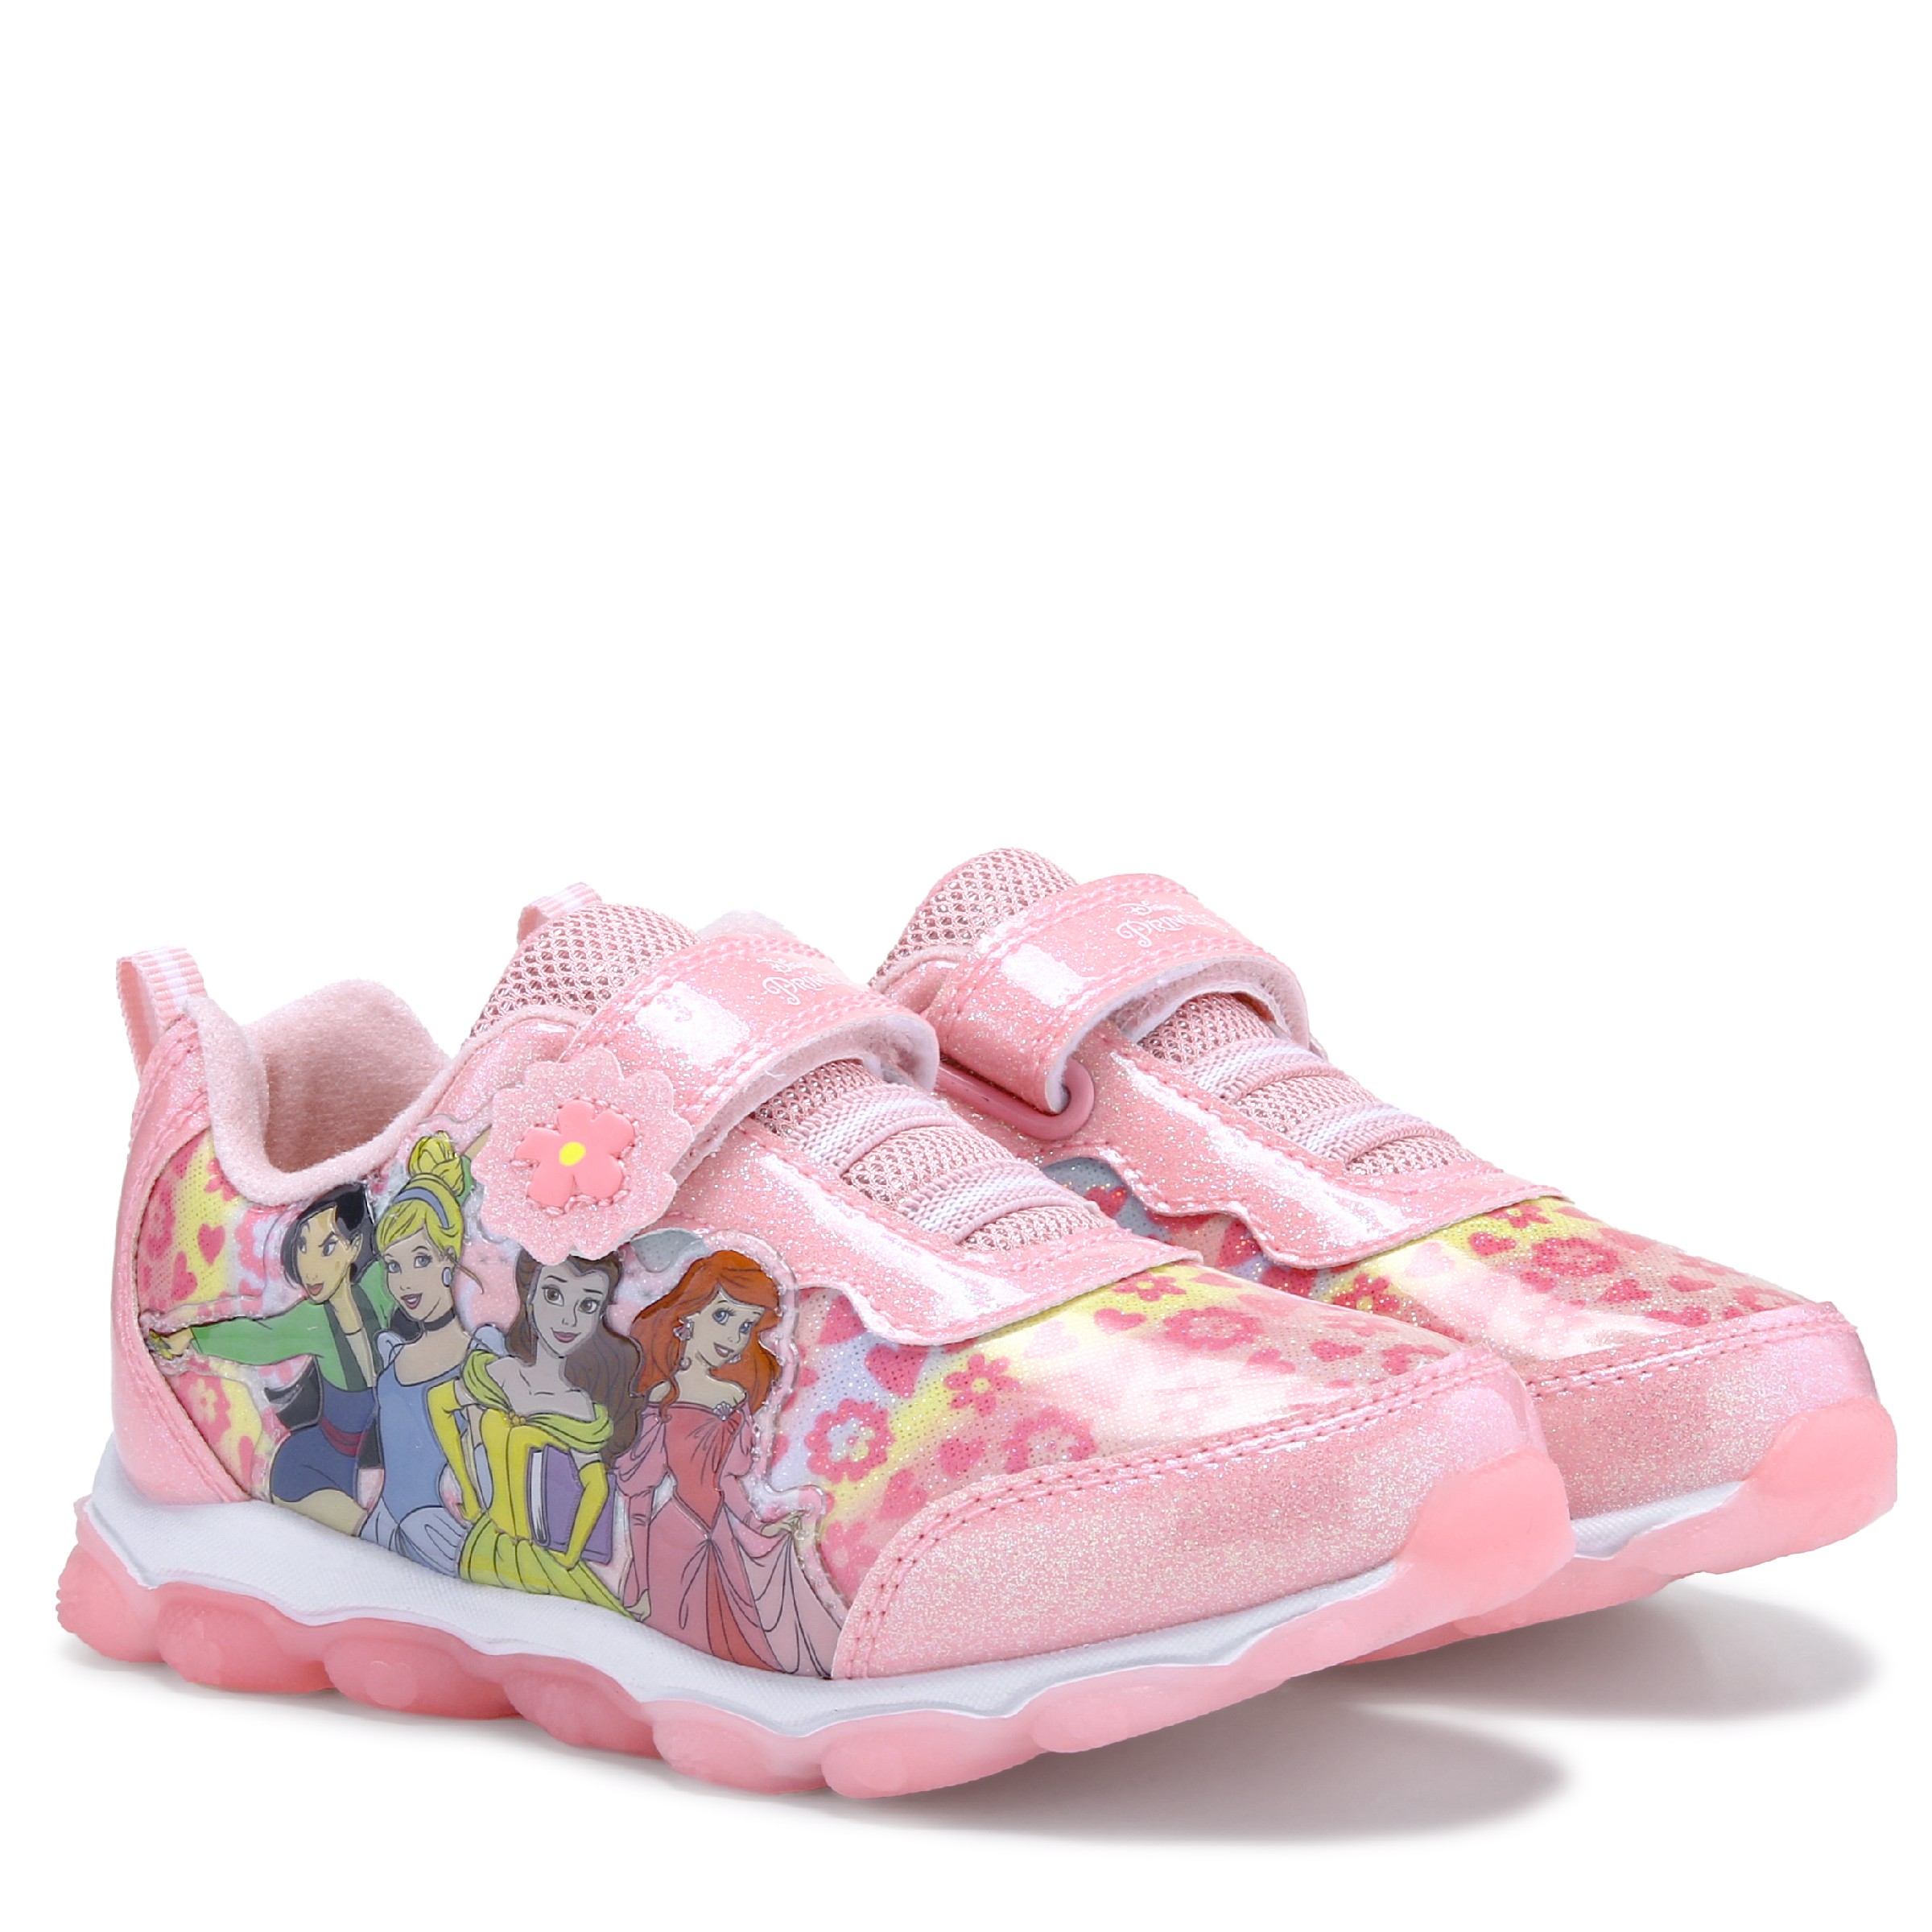 Disney Princess Shoes 5 pr. Elsa, Anna, Snow White, Cinderella & Belle 1.5